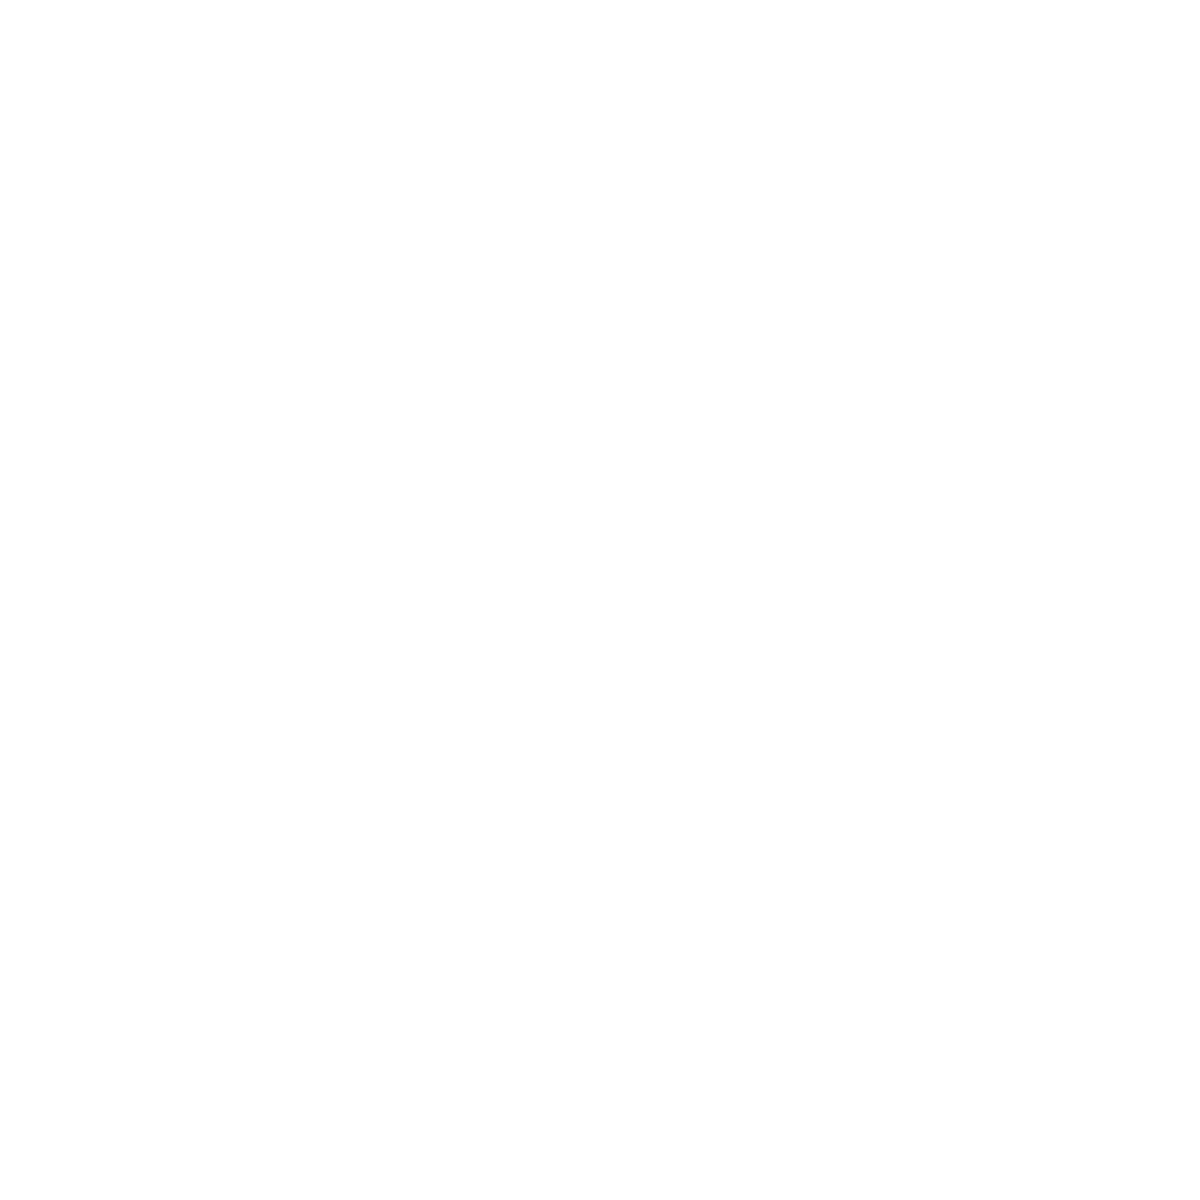 Heights Skate Club